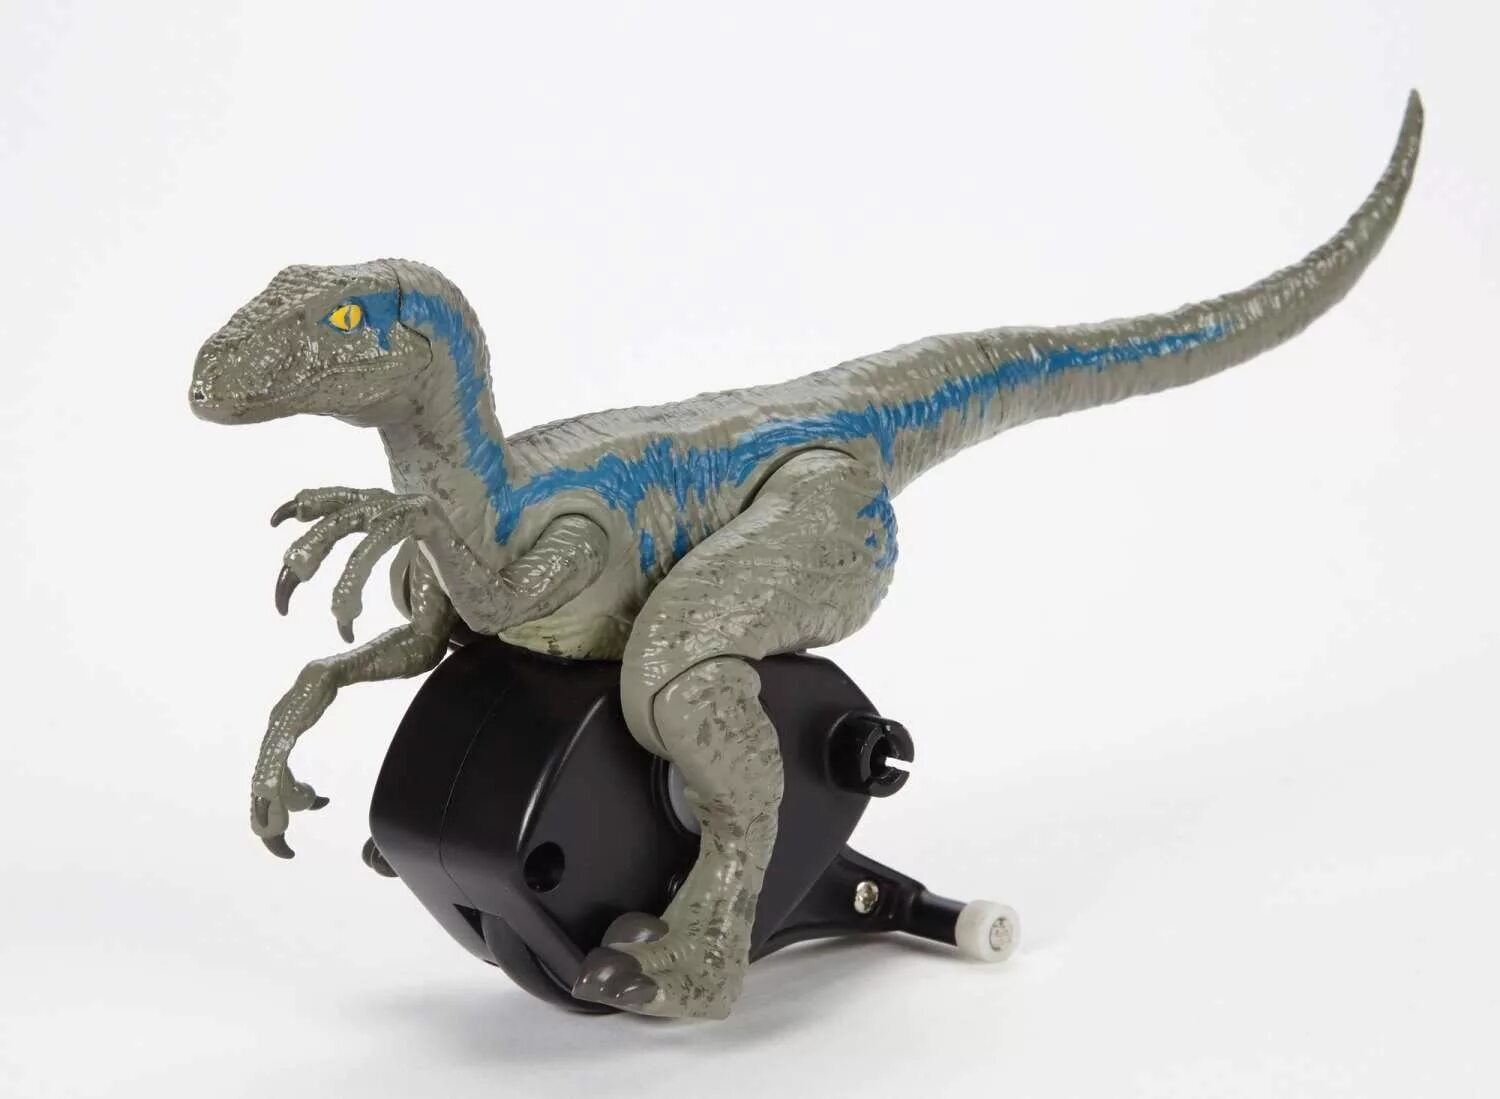 Jurassic World игрушки Velociraptor Blue. Велоцераптор Блю Jurassic World. Велоцераптор Блю игрушка мир Юрского периода. Мягкая игрушка Велоцираптор Блю.